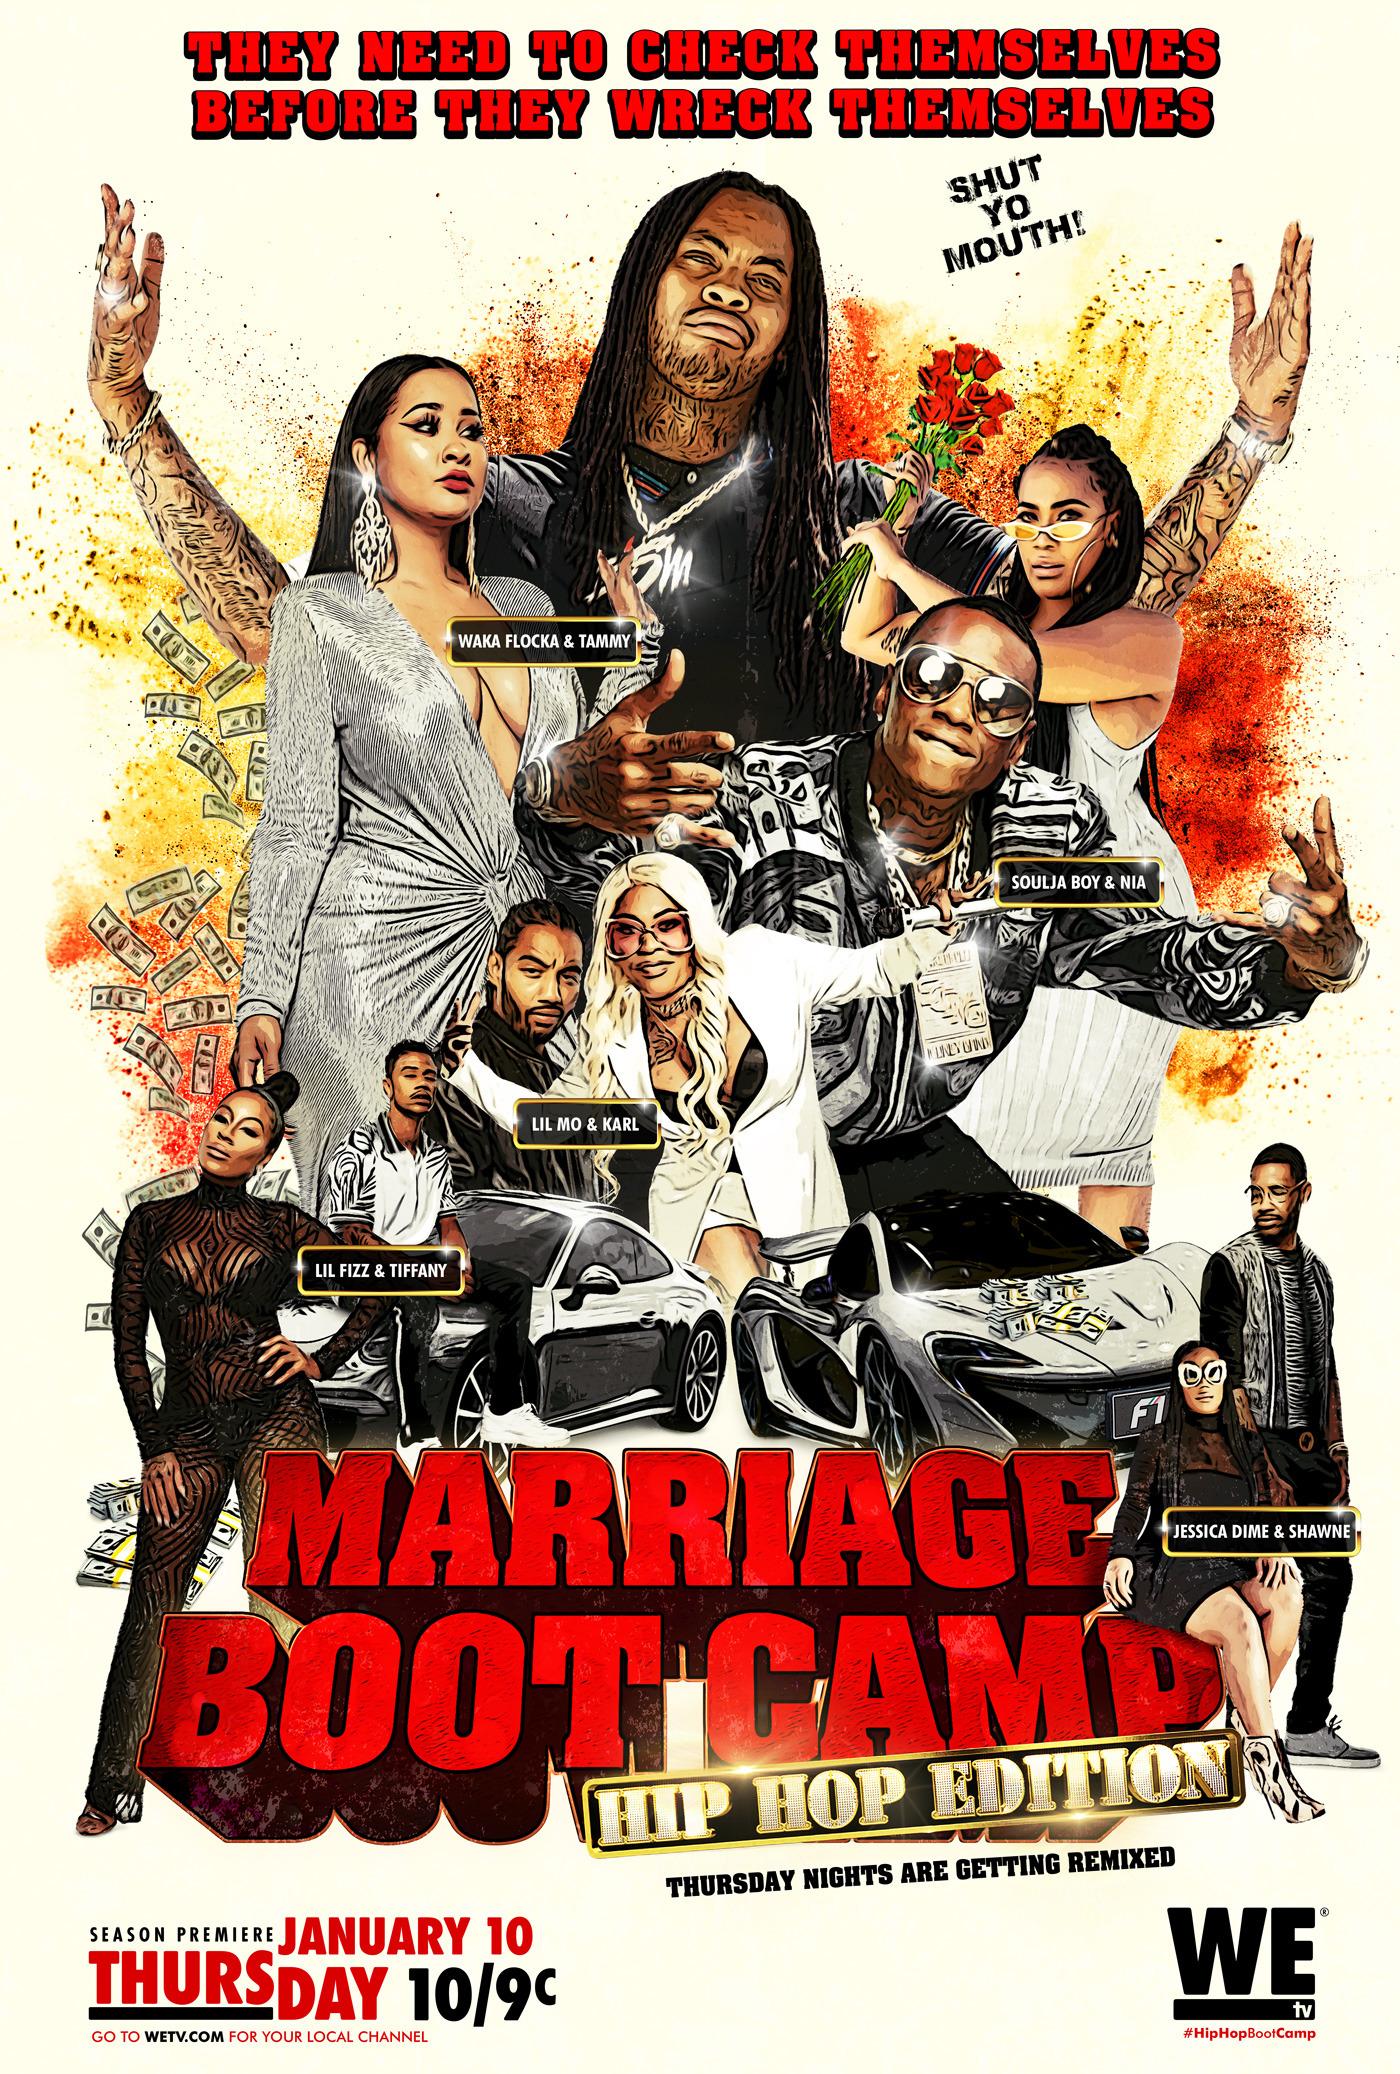 Постер фильма Marriage Boot Camp: Reality Stars